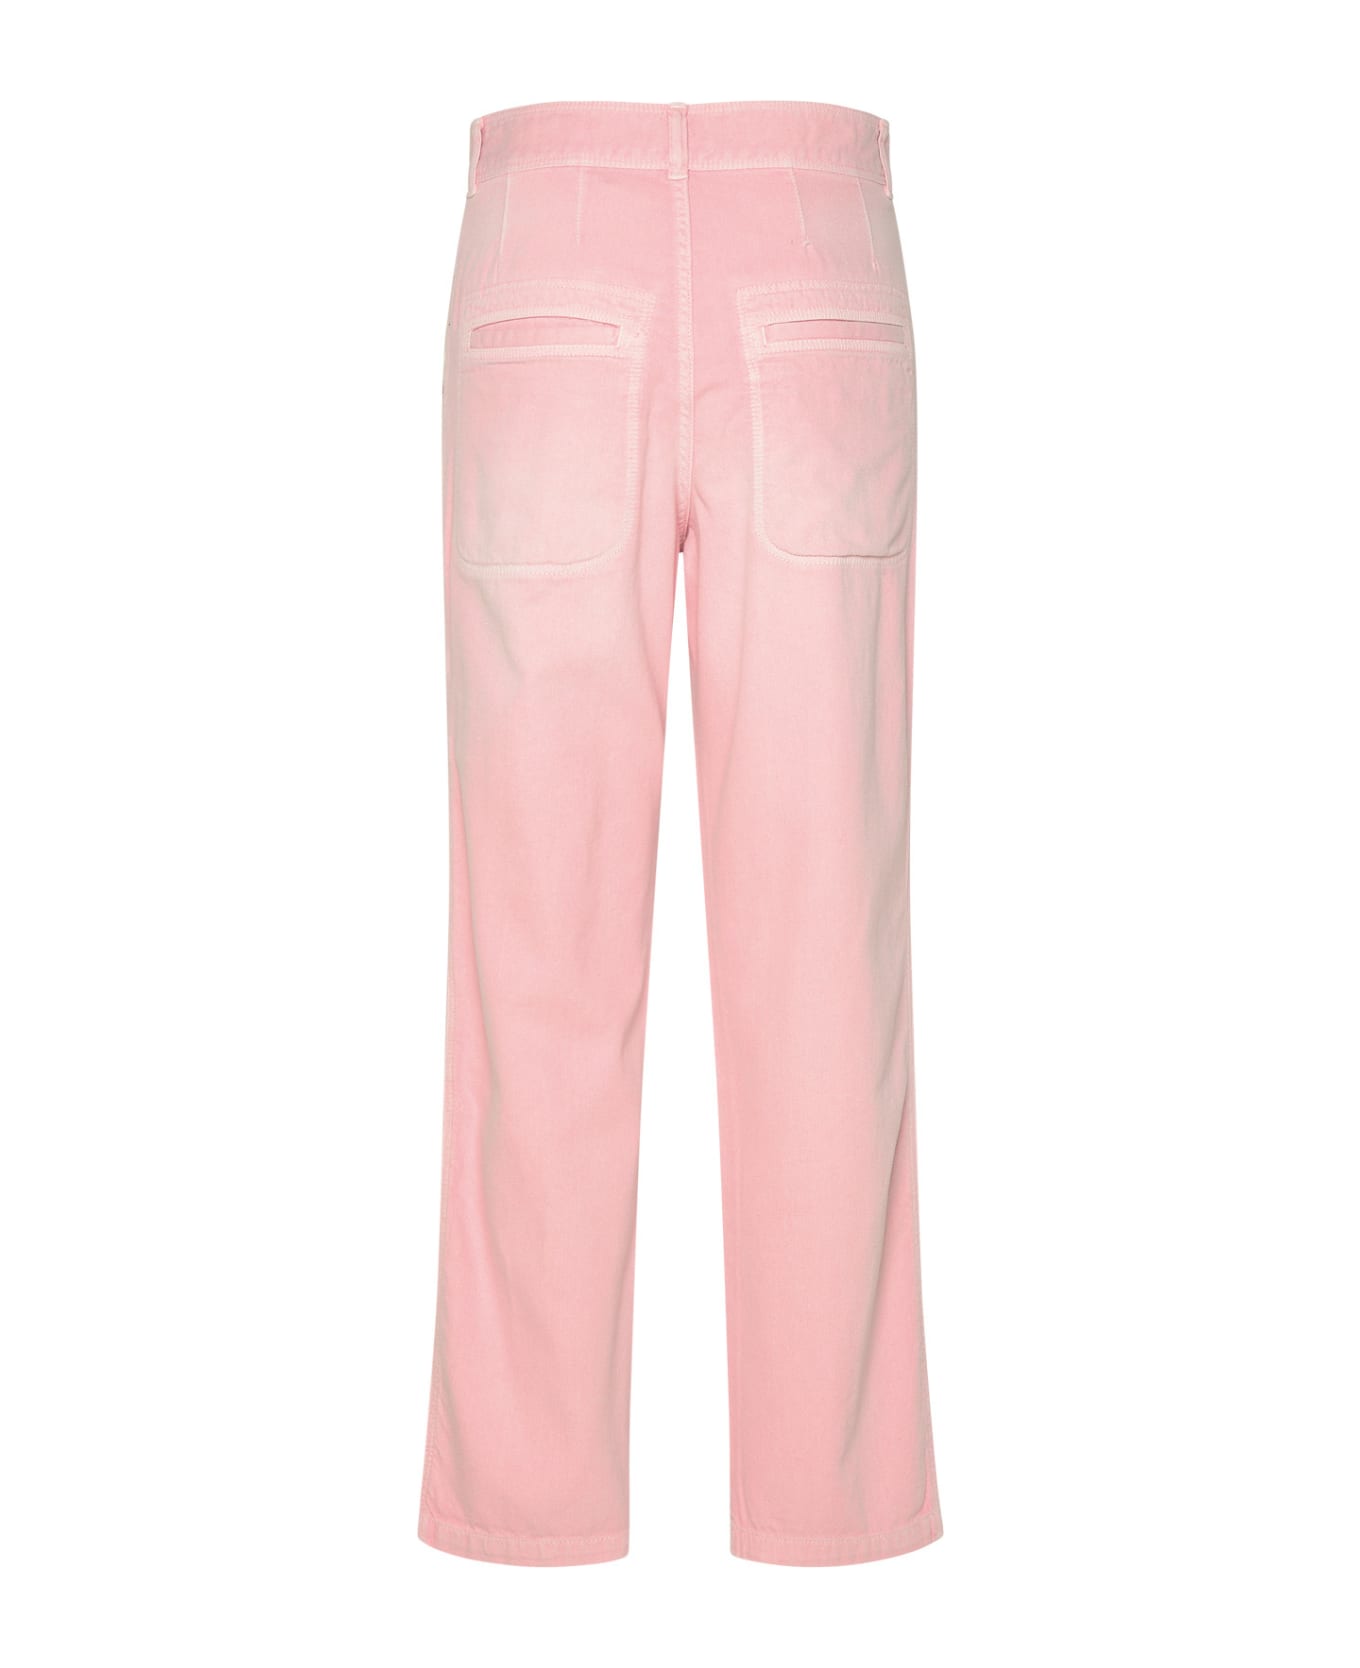 Isabel Marant 'juliette' Pink Cotton Trousers - Pink